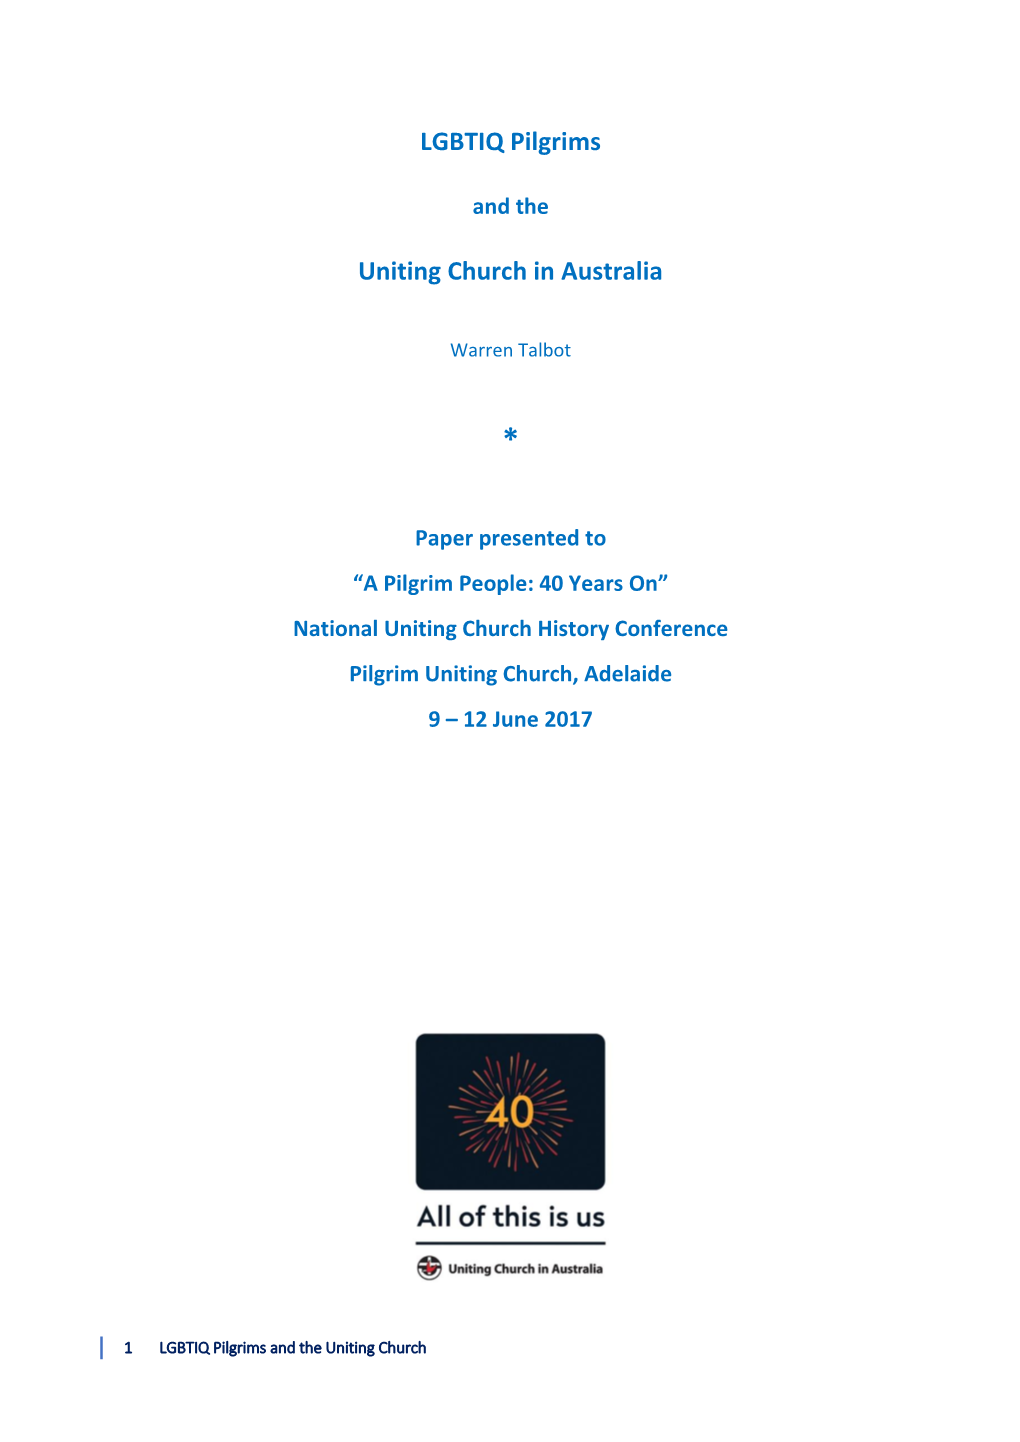 LGBTIQ Pilgrims Uniting Church in Australia